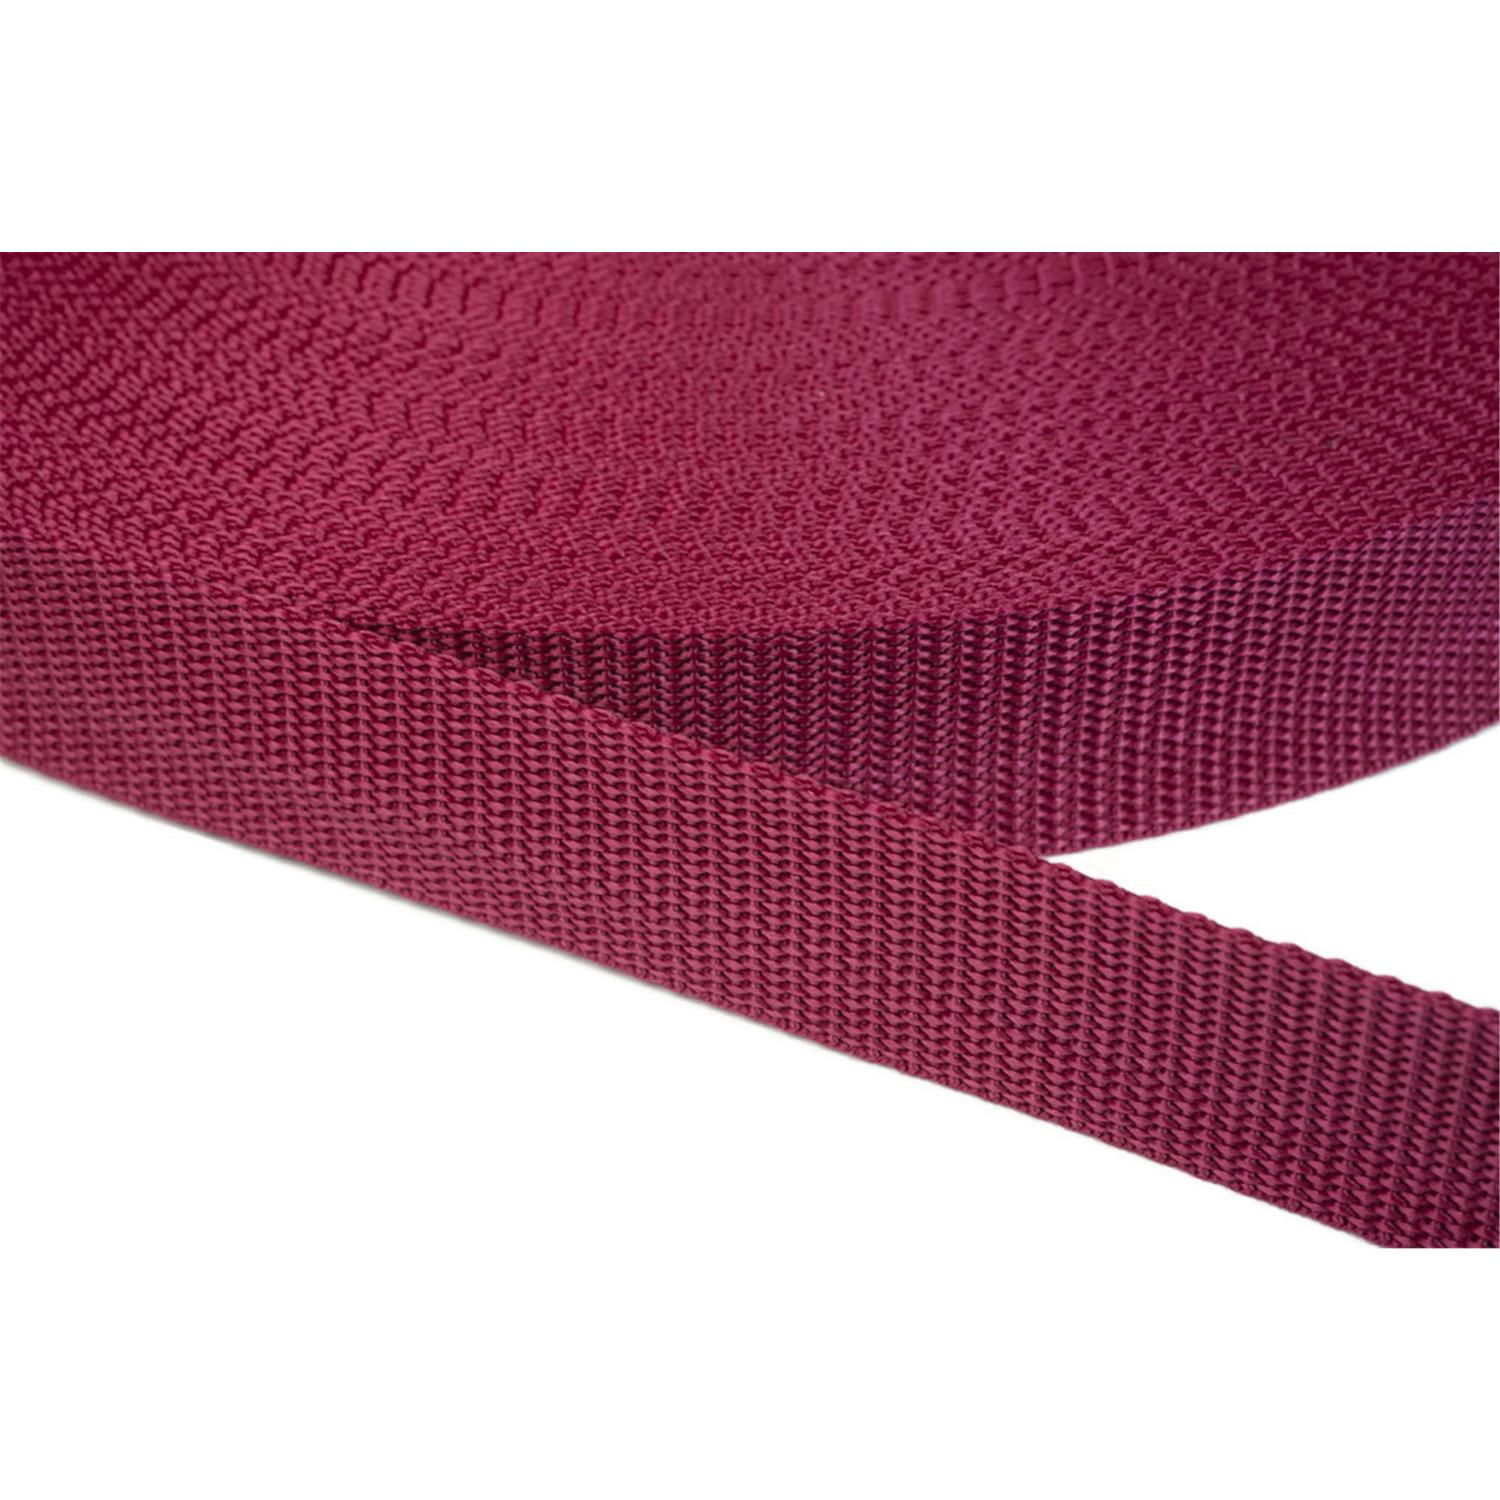 Gurtband 20mm breit aus Polypropylen in 41 Farben 21 - dunkelrot 06 Meter